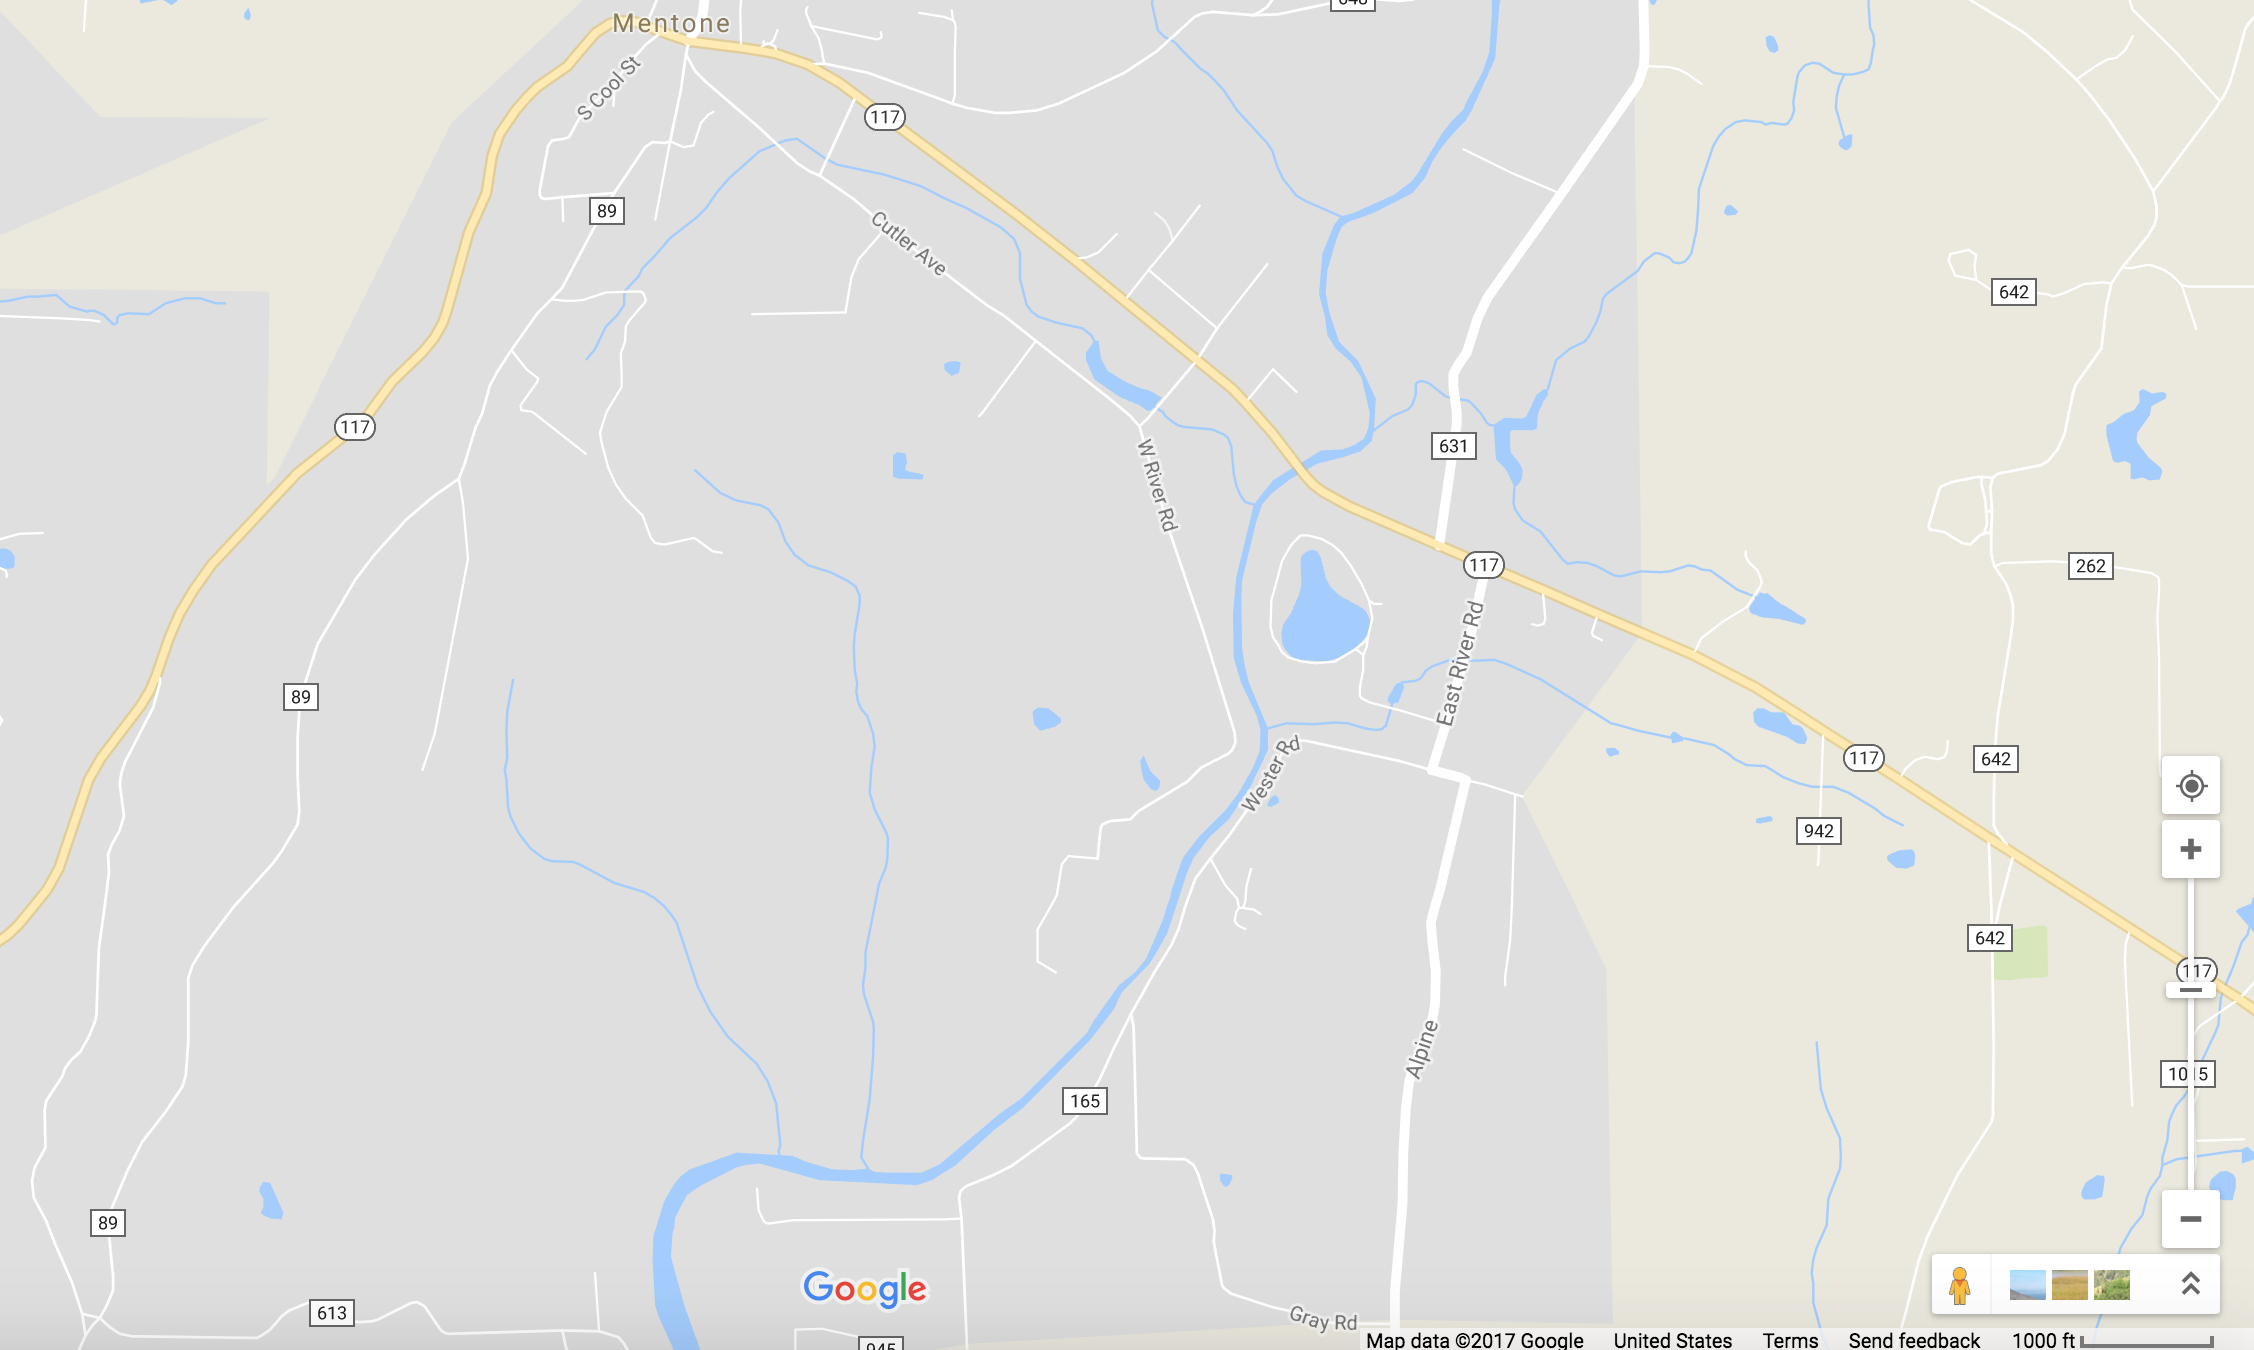 Mentone, Alabama, on Google Maps